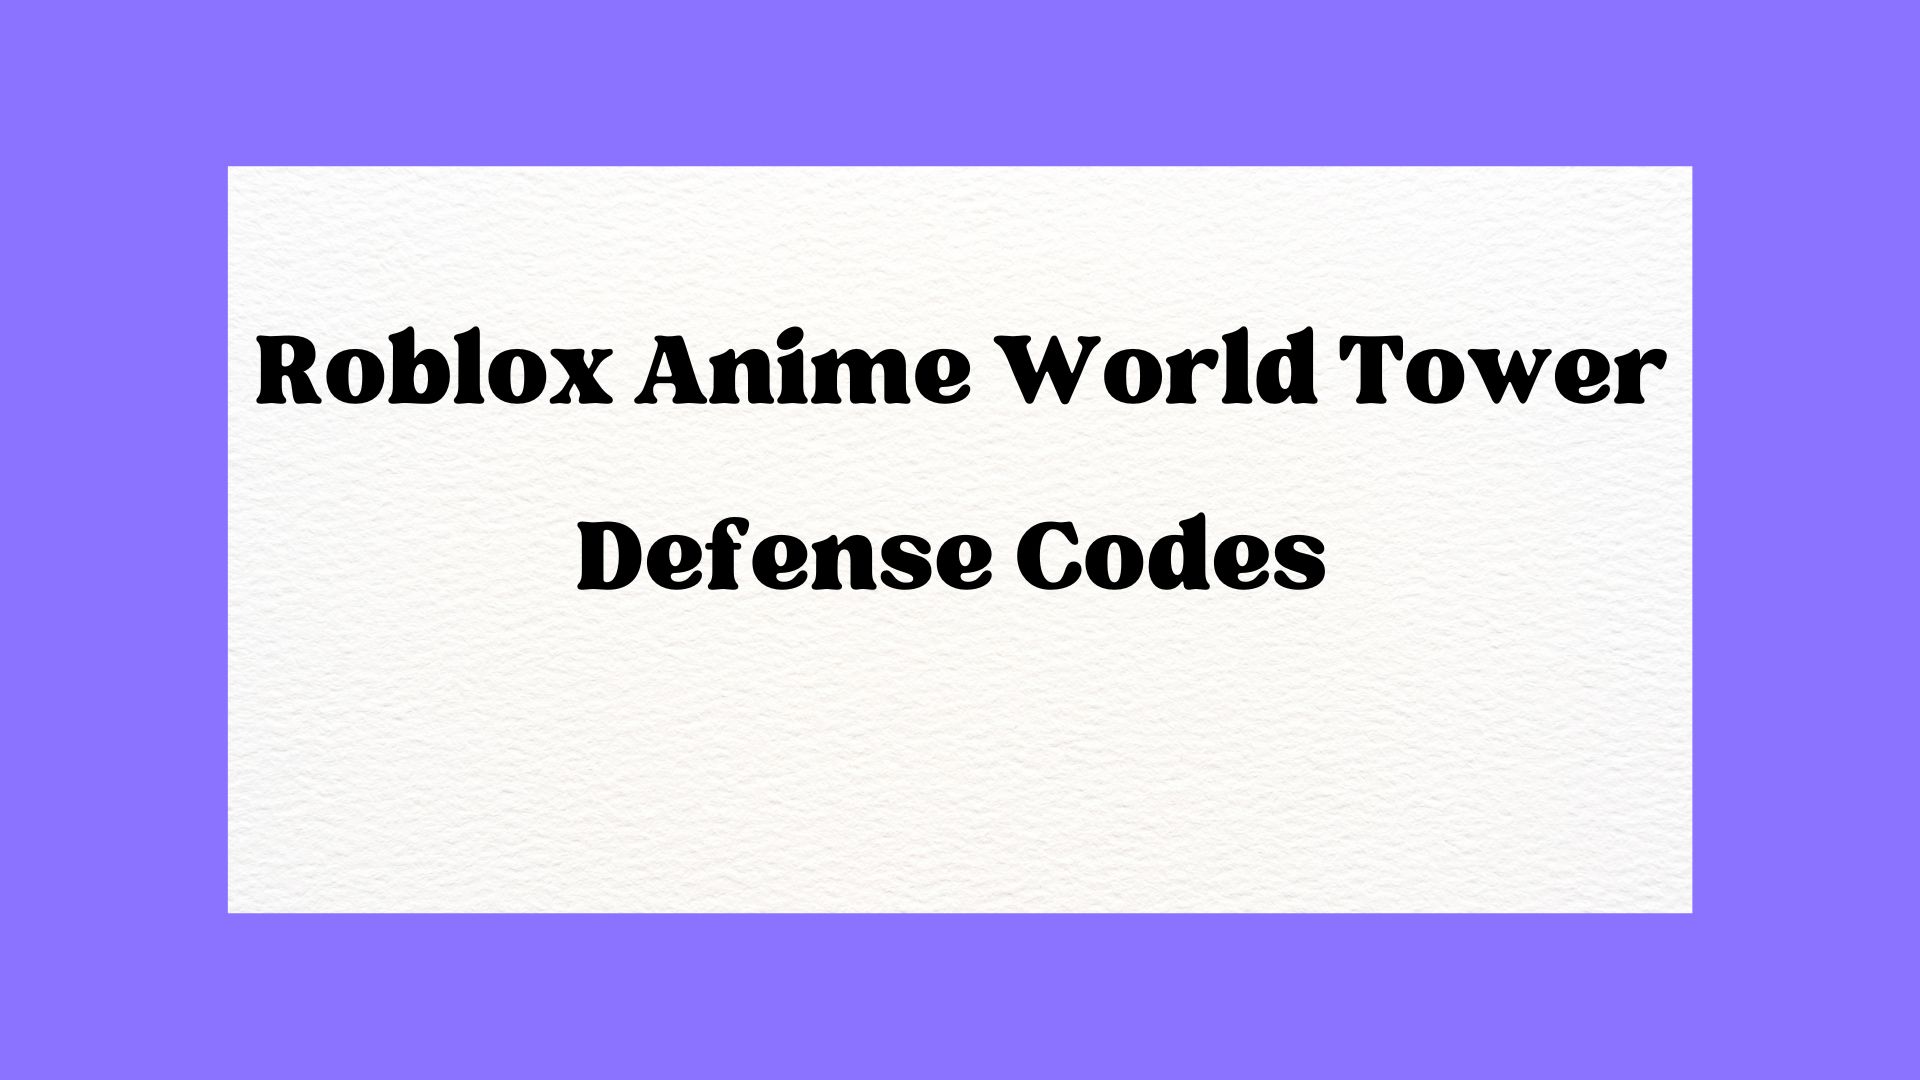 Roblox Anime World Tower Defense Codes